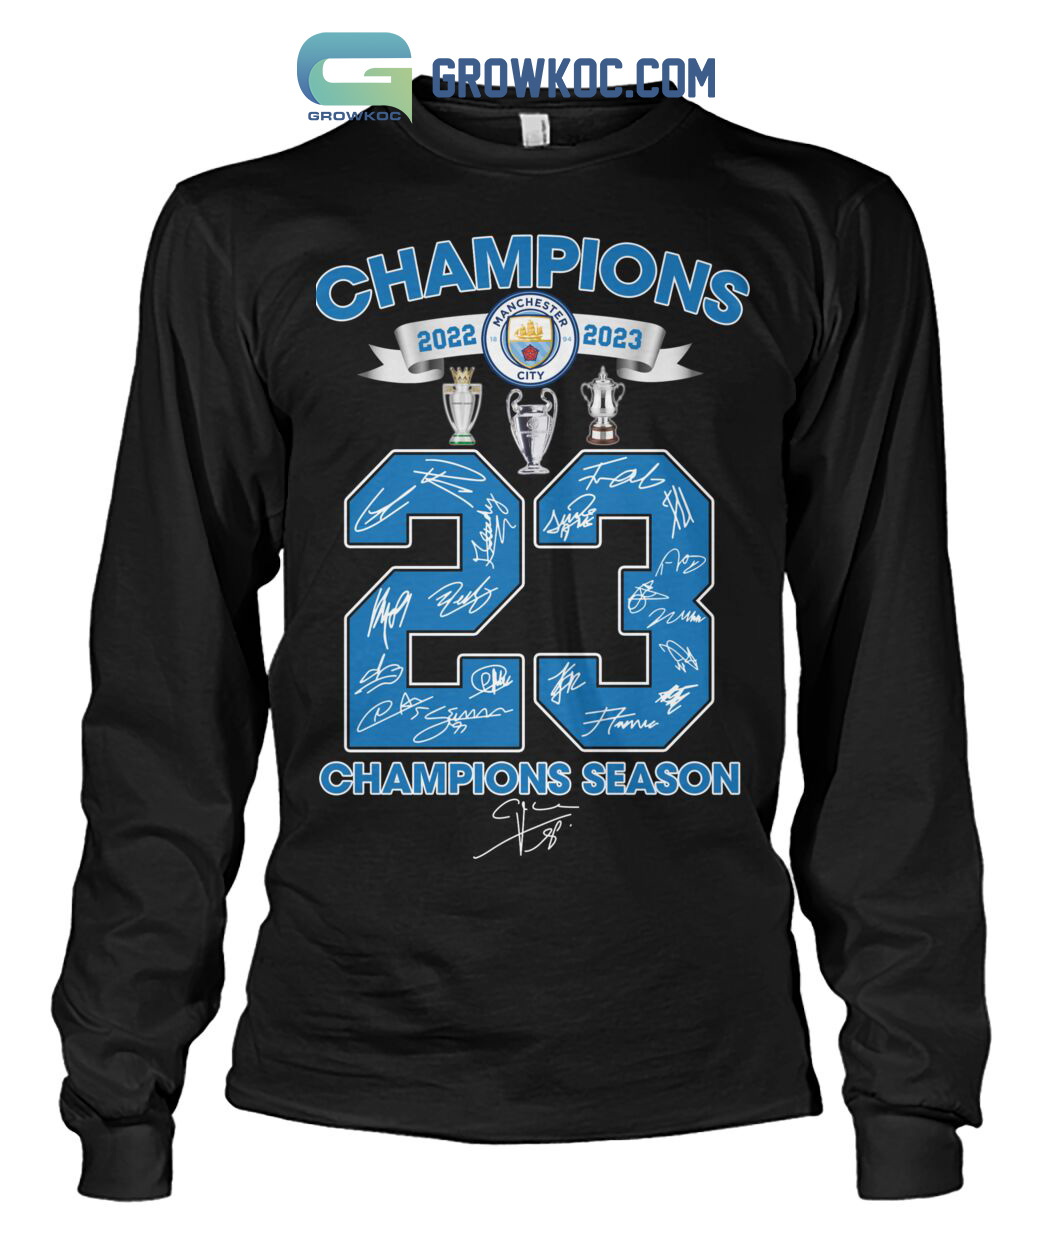 The Citizens 3 Times Champions Perfect Season T-Shirt